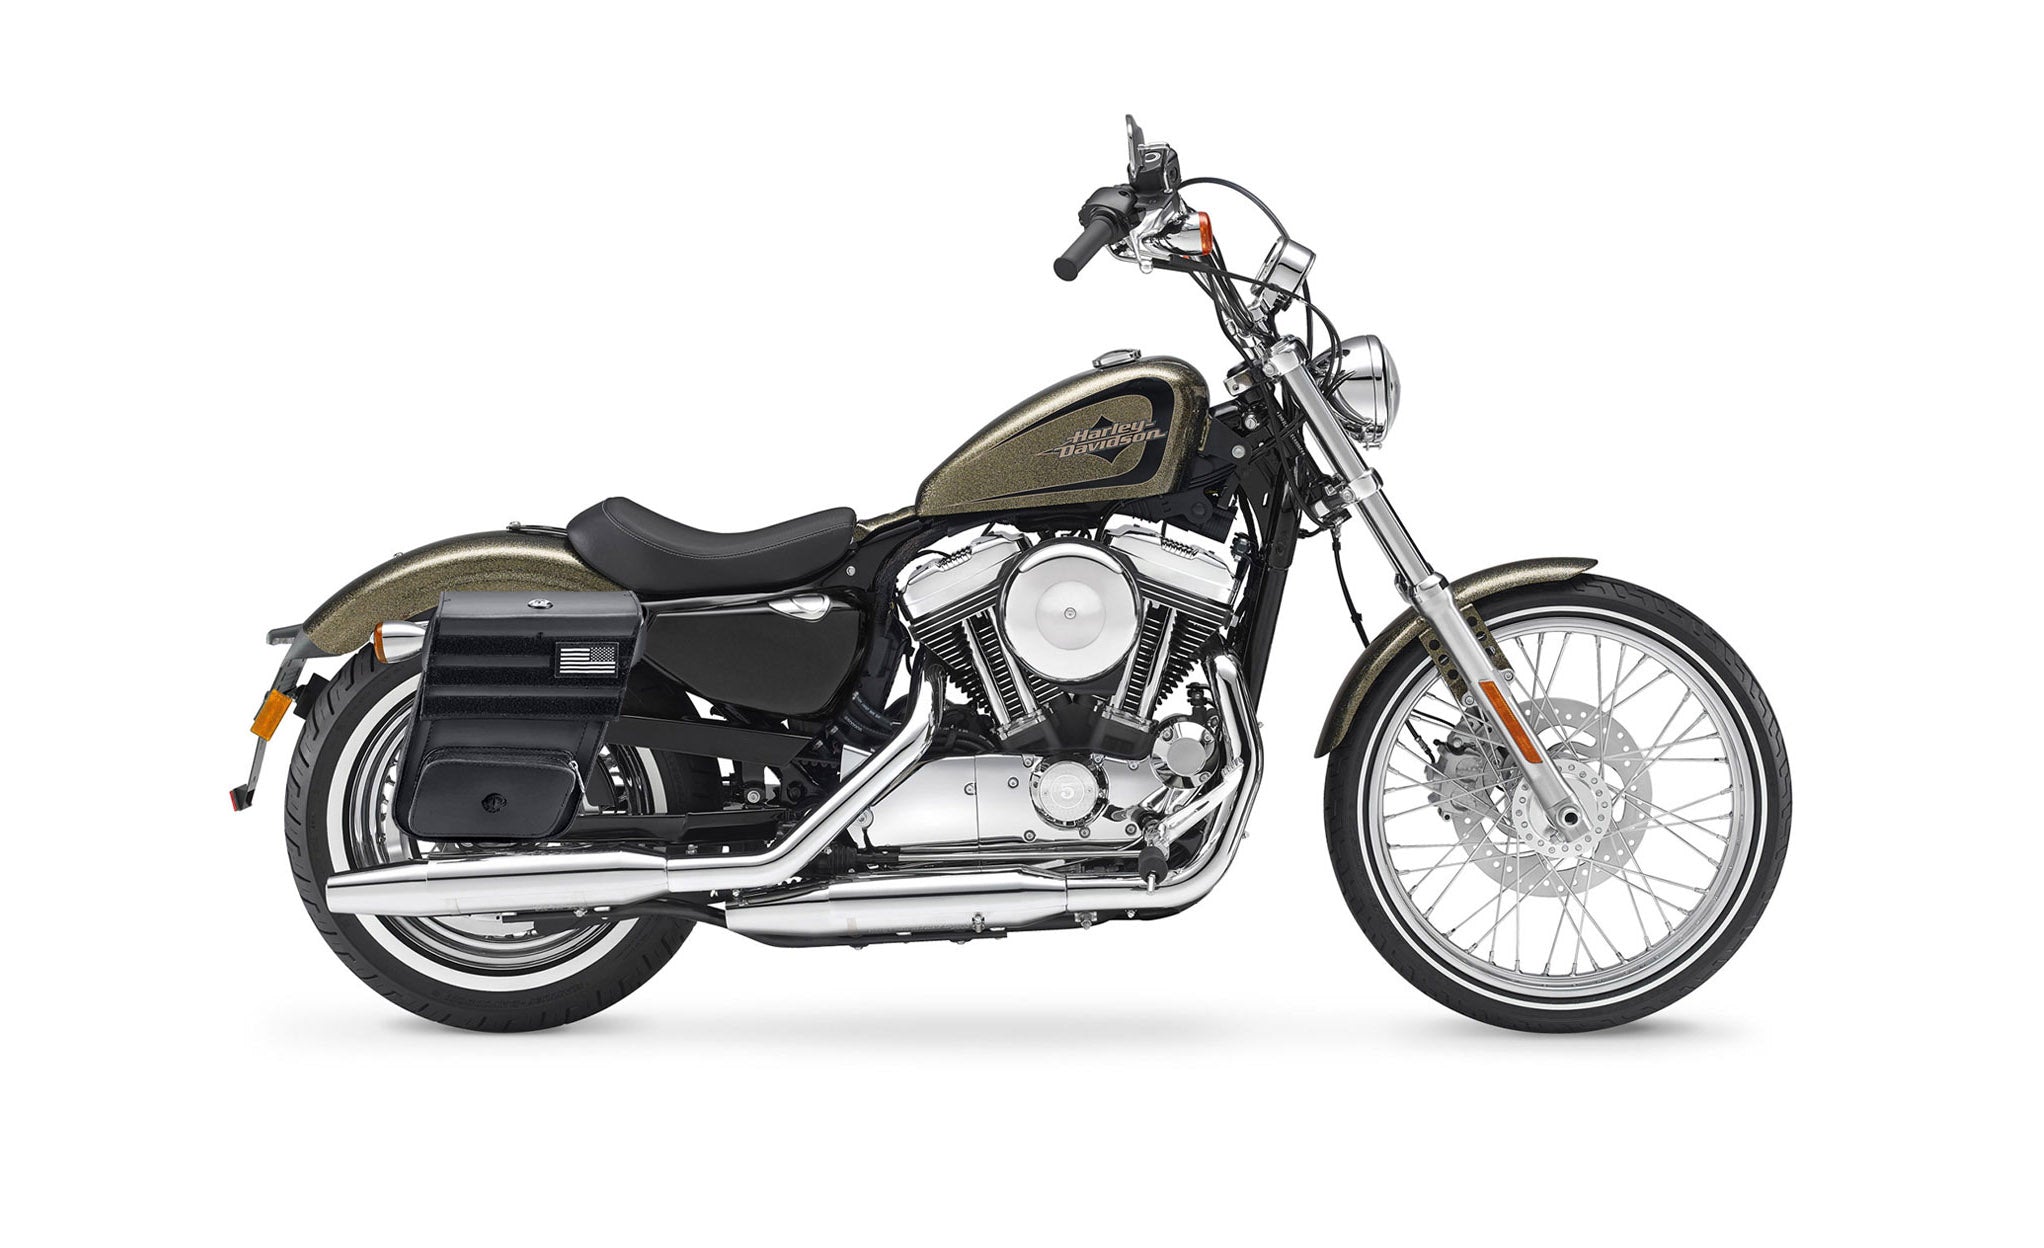 Viking Military Medium Leather Motorcycle Saddlebags For Harley Sportster 72 Xl1200V on Bike Photo @expand